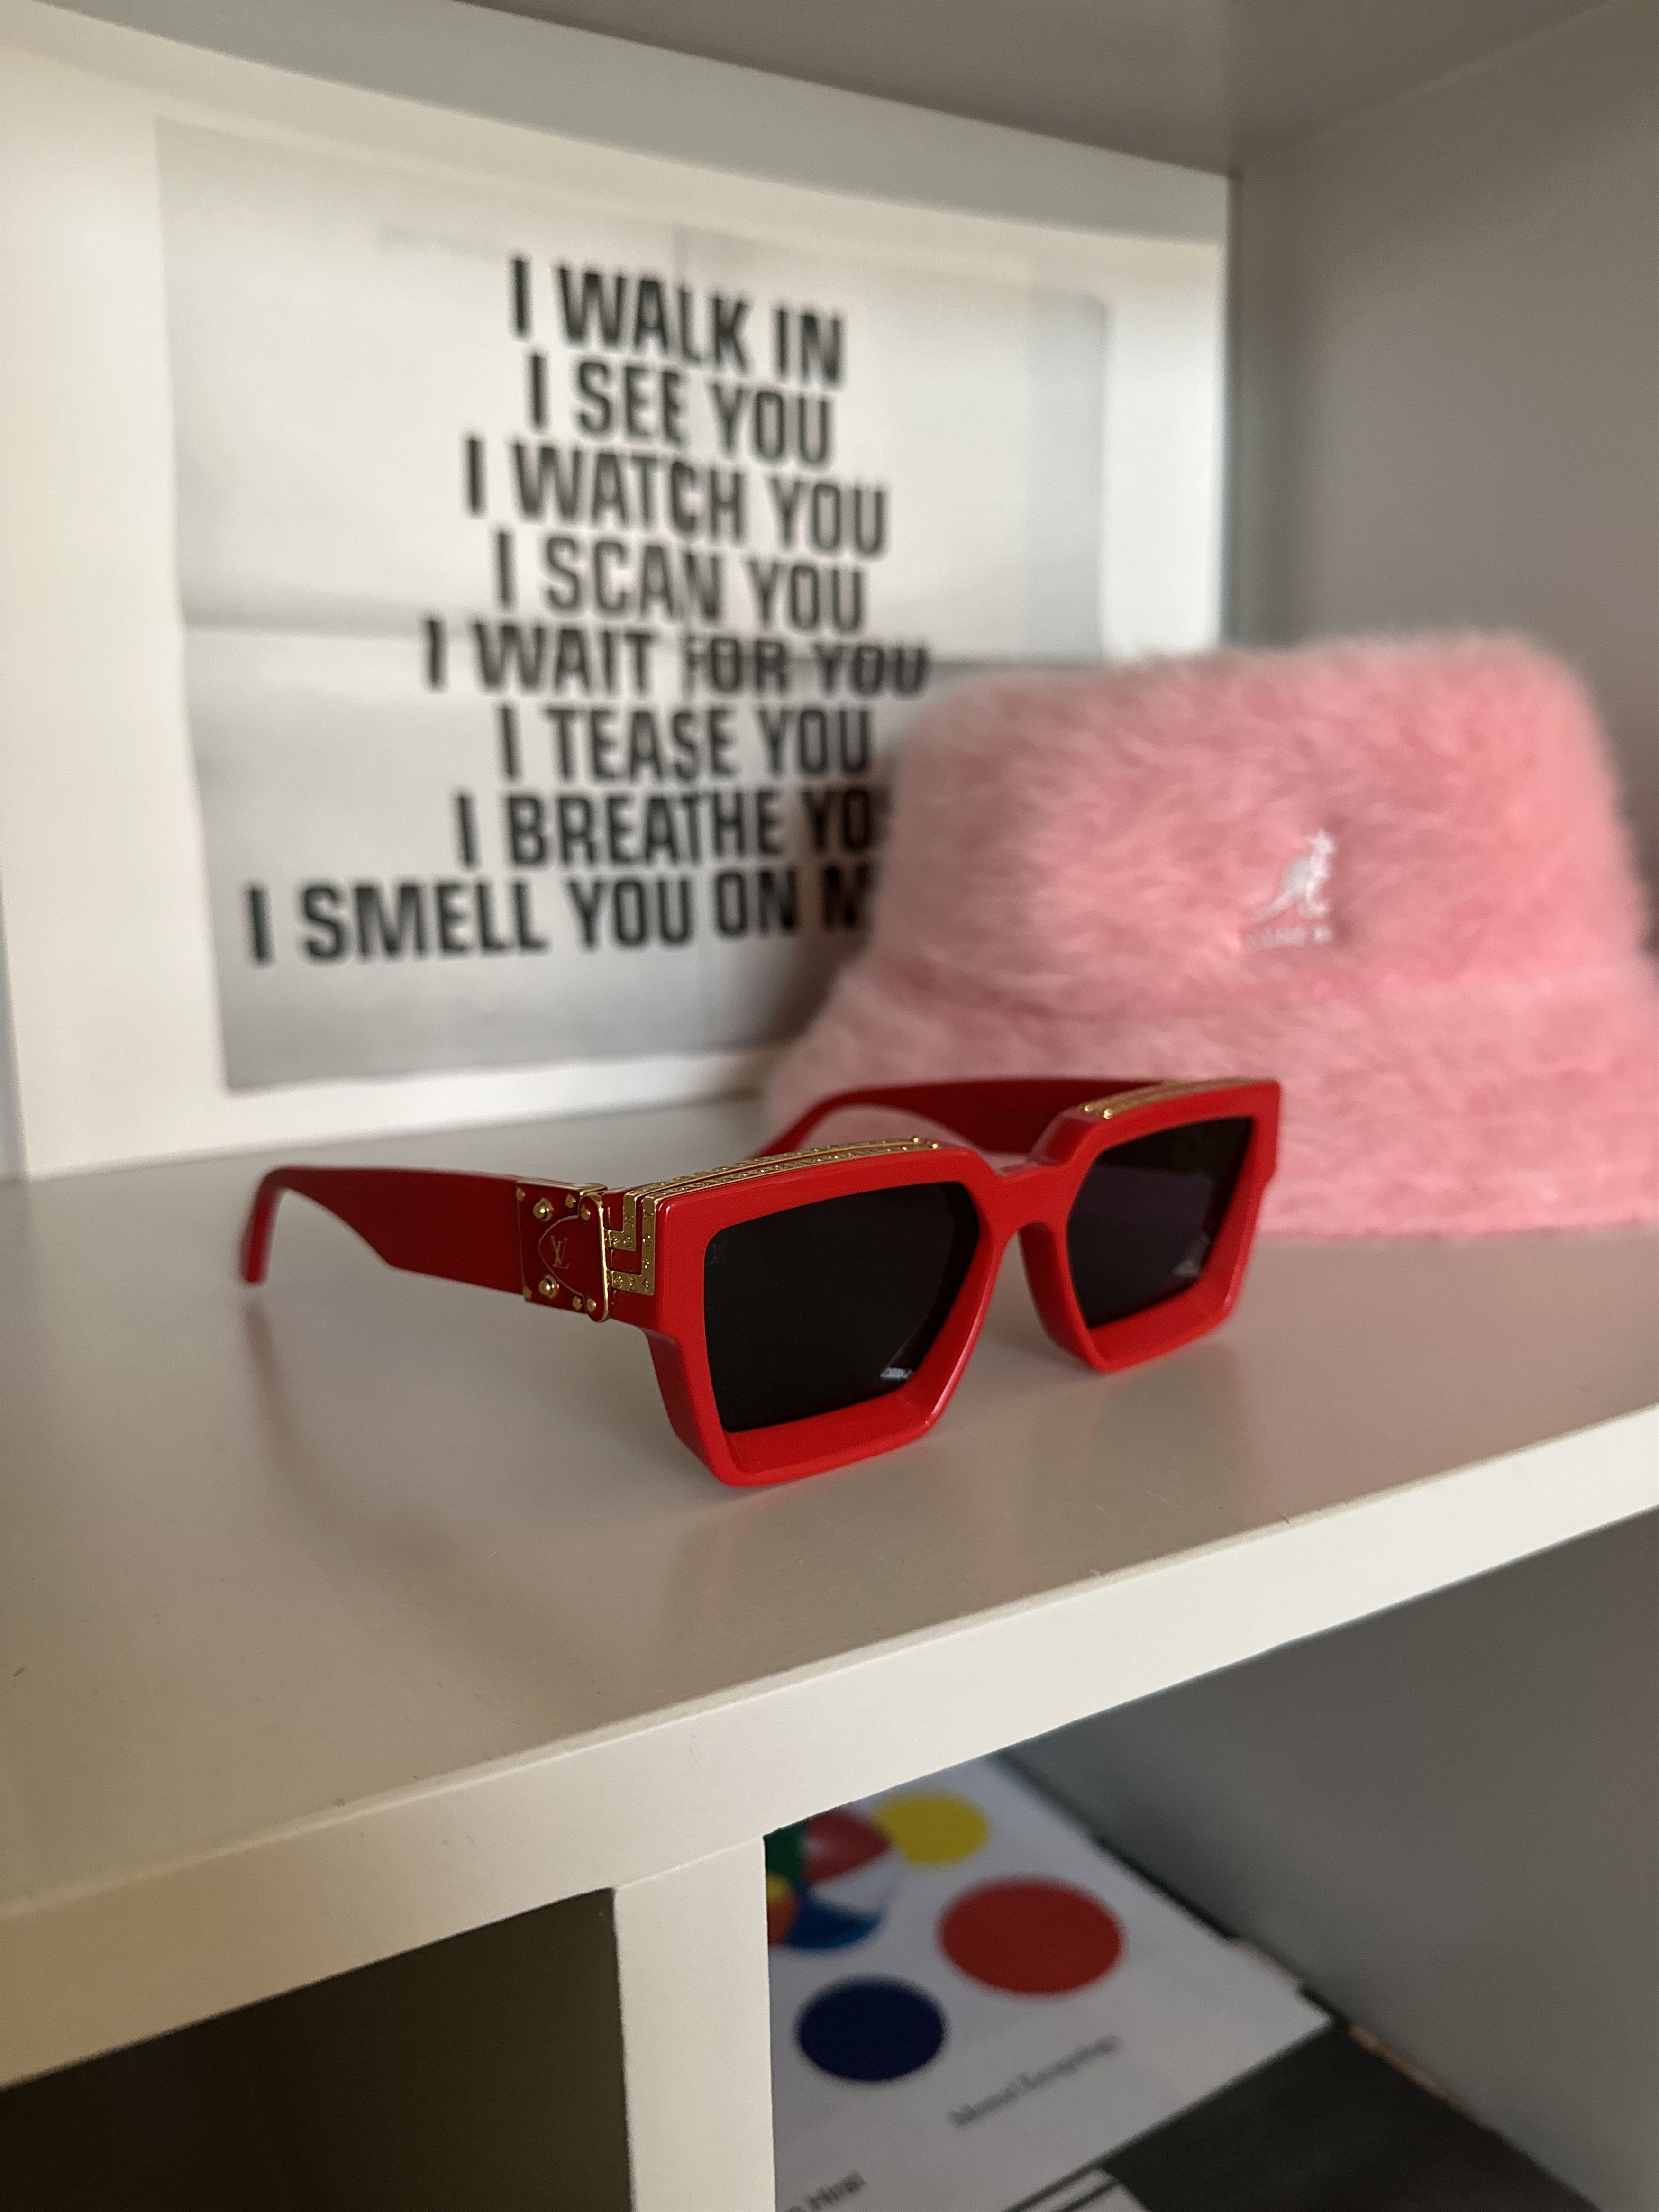 Millionaire sunglasses Louis Vuitton Red in Plastic - 29984075